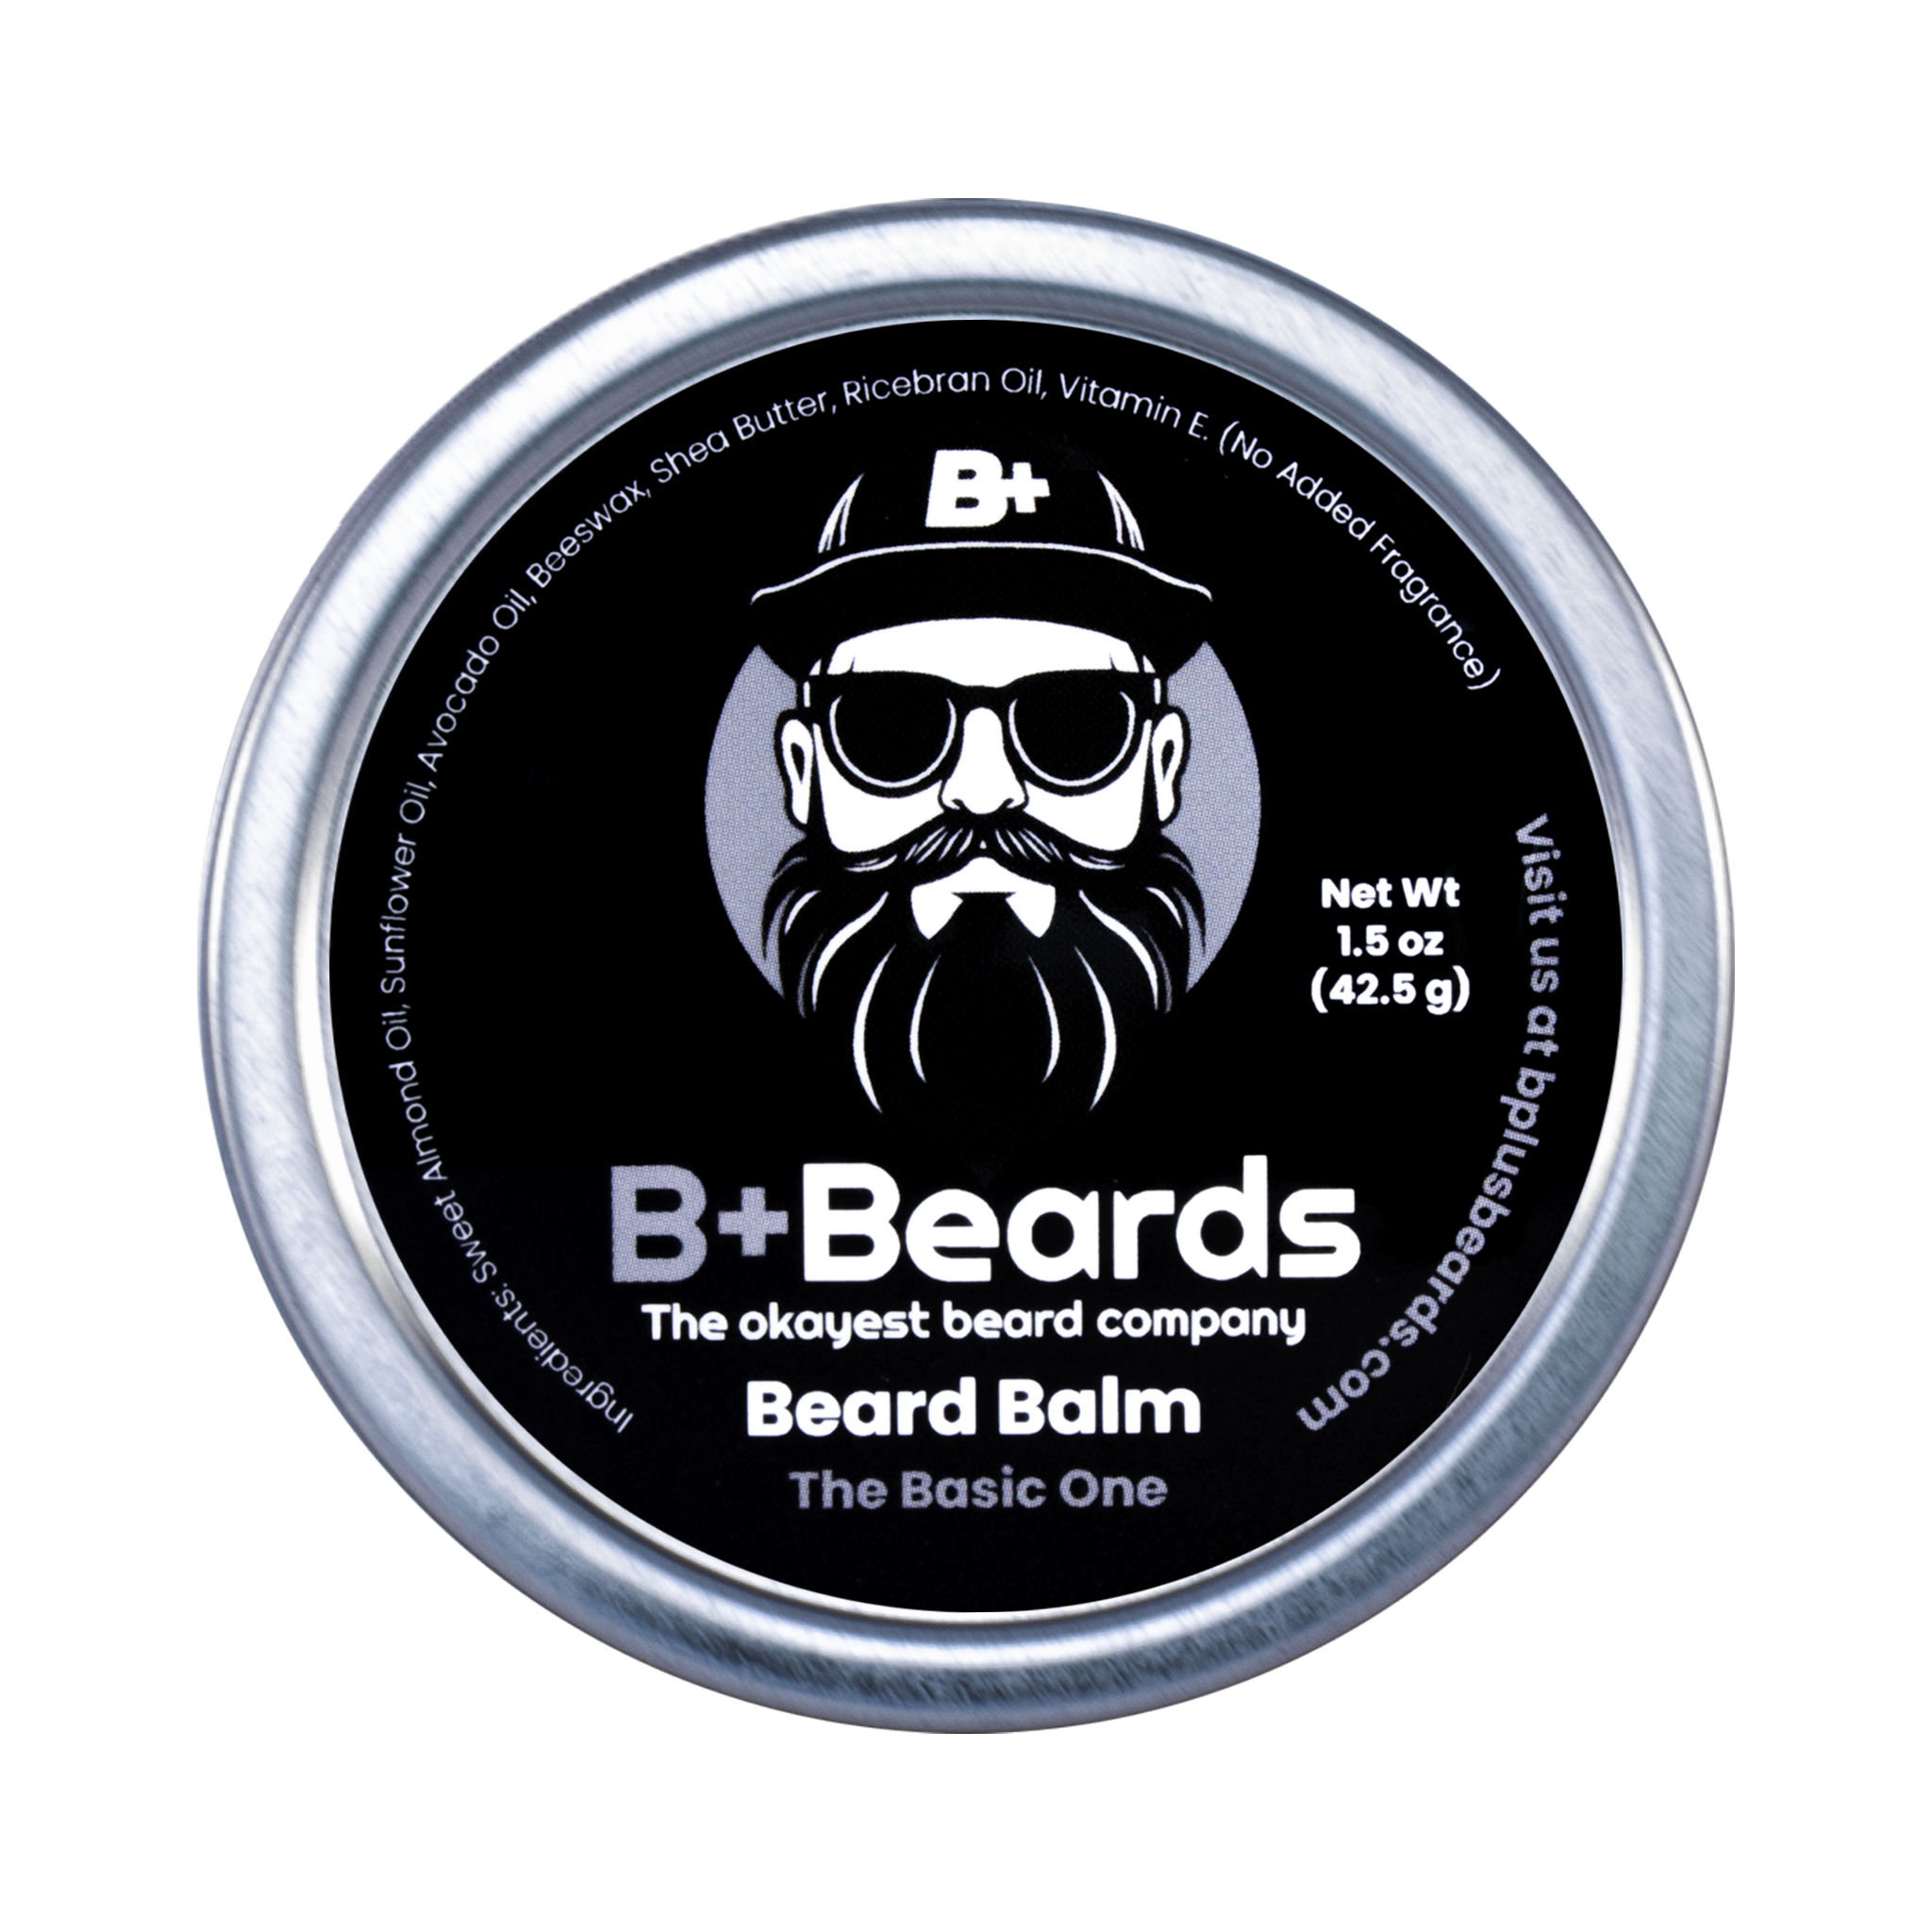 The Basic One Beard Balm